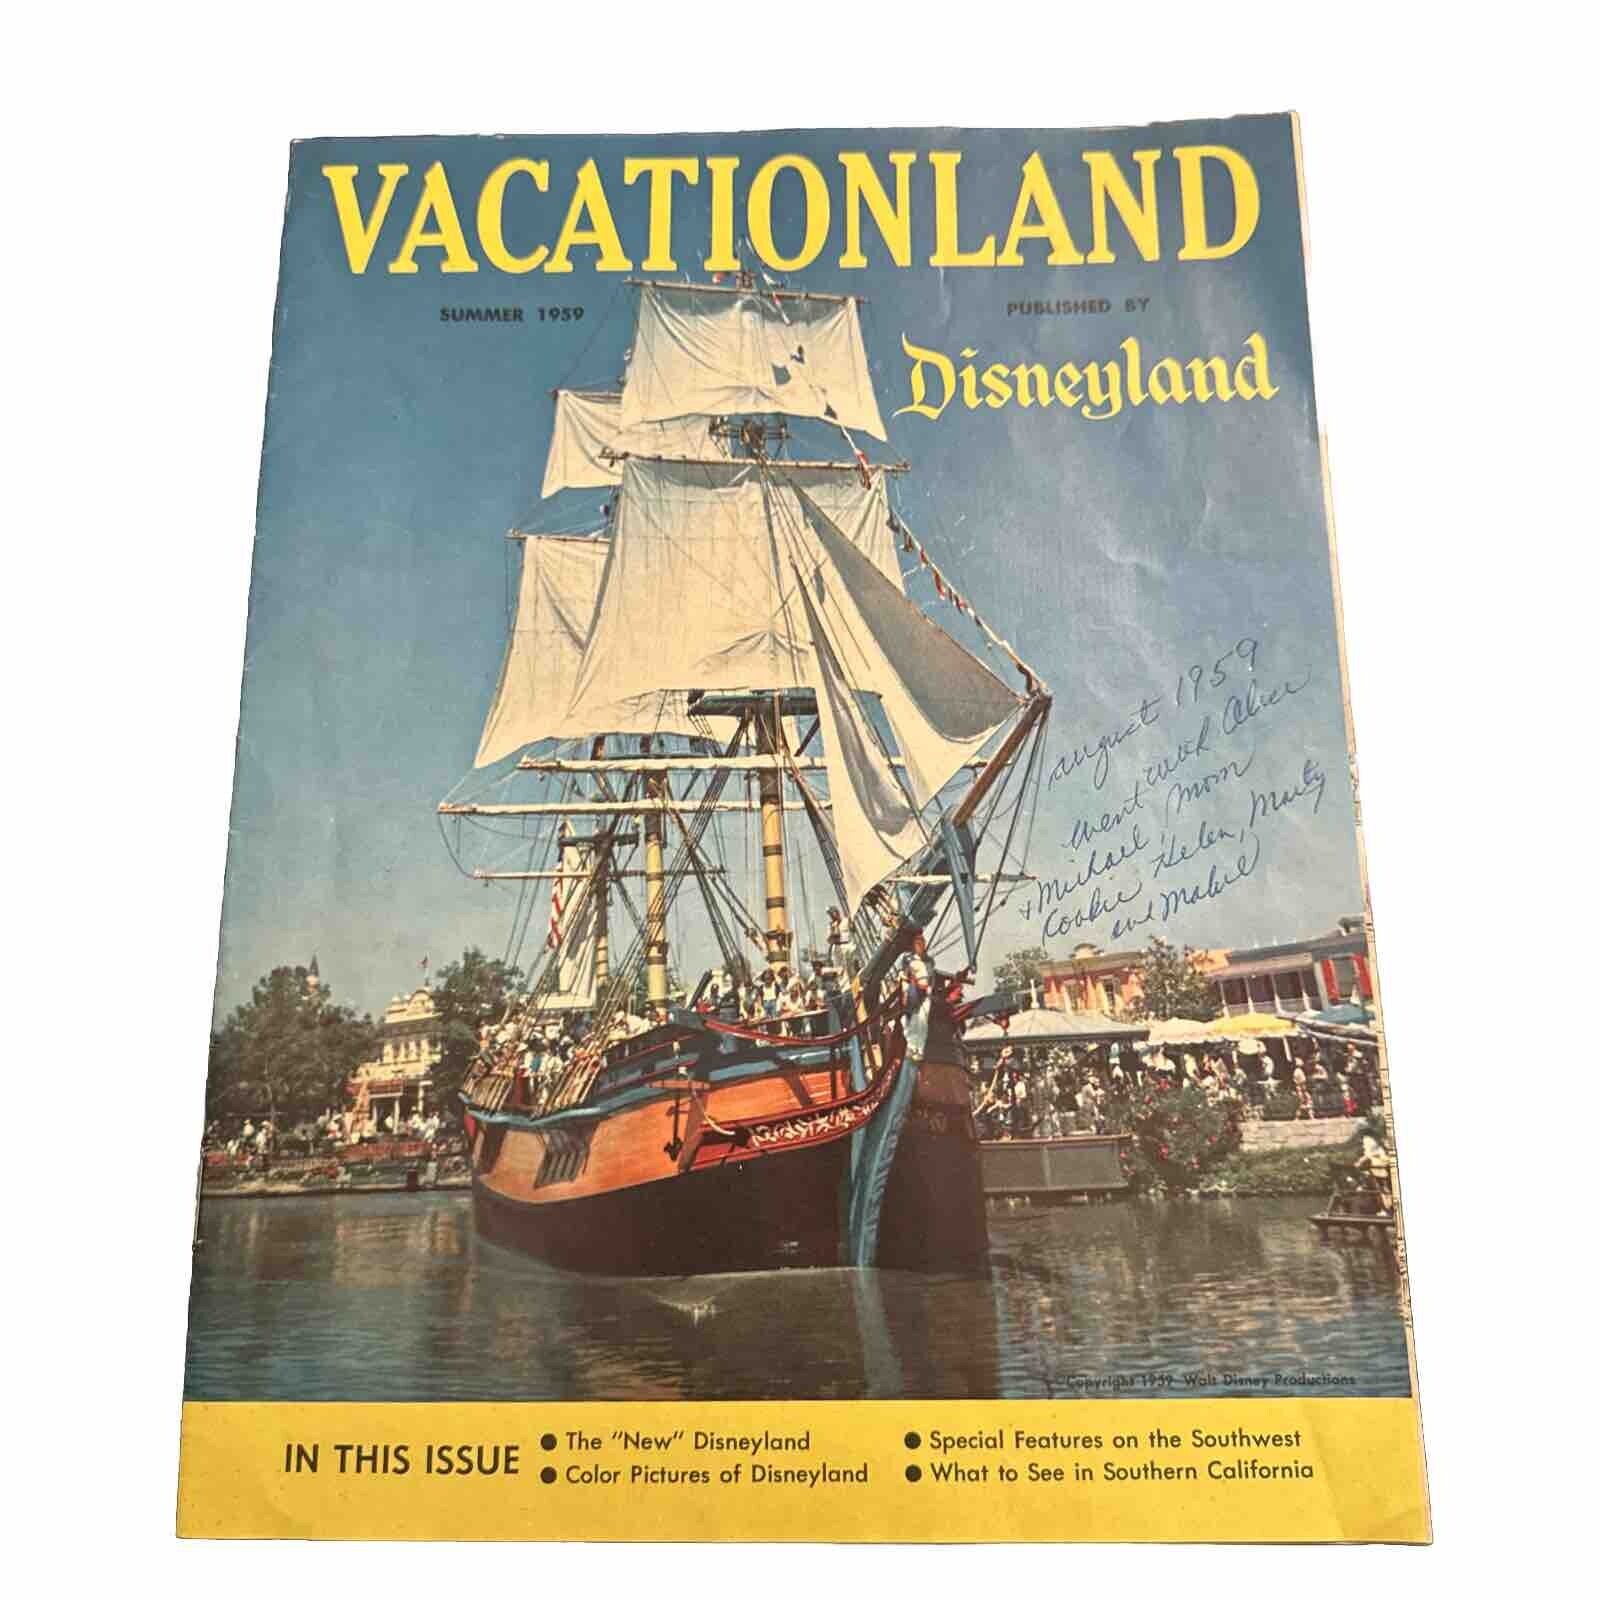 Disneyland Vacationland Summer 1959 Magazine